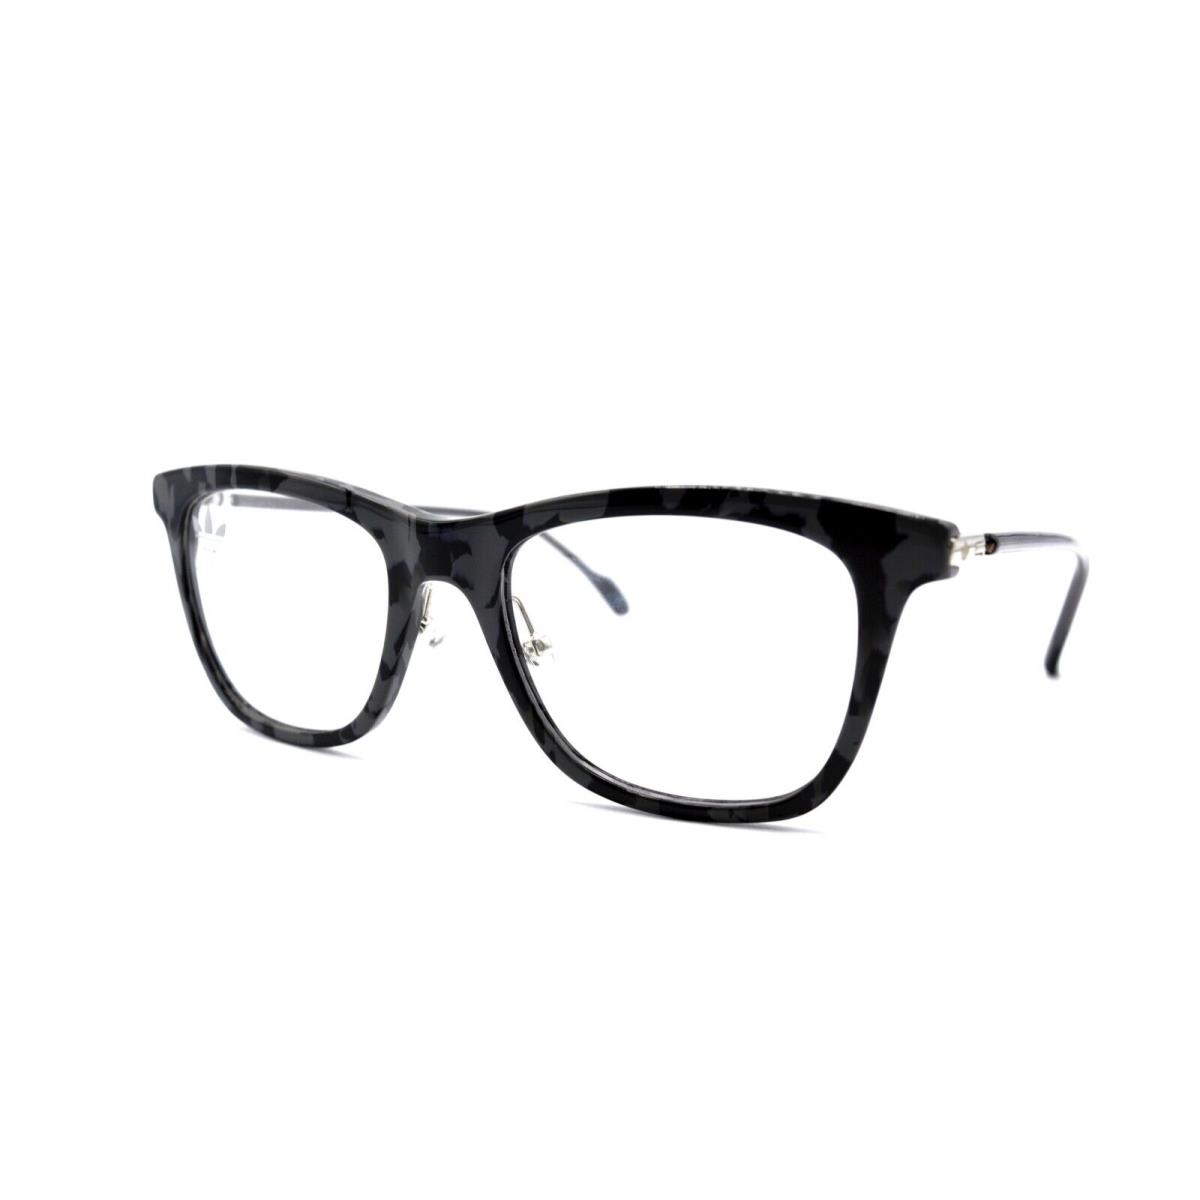 Adidas eyeglasses  - BLACK GREY SPOTTED Frame 1